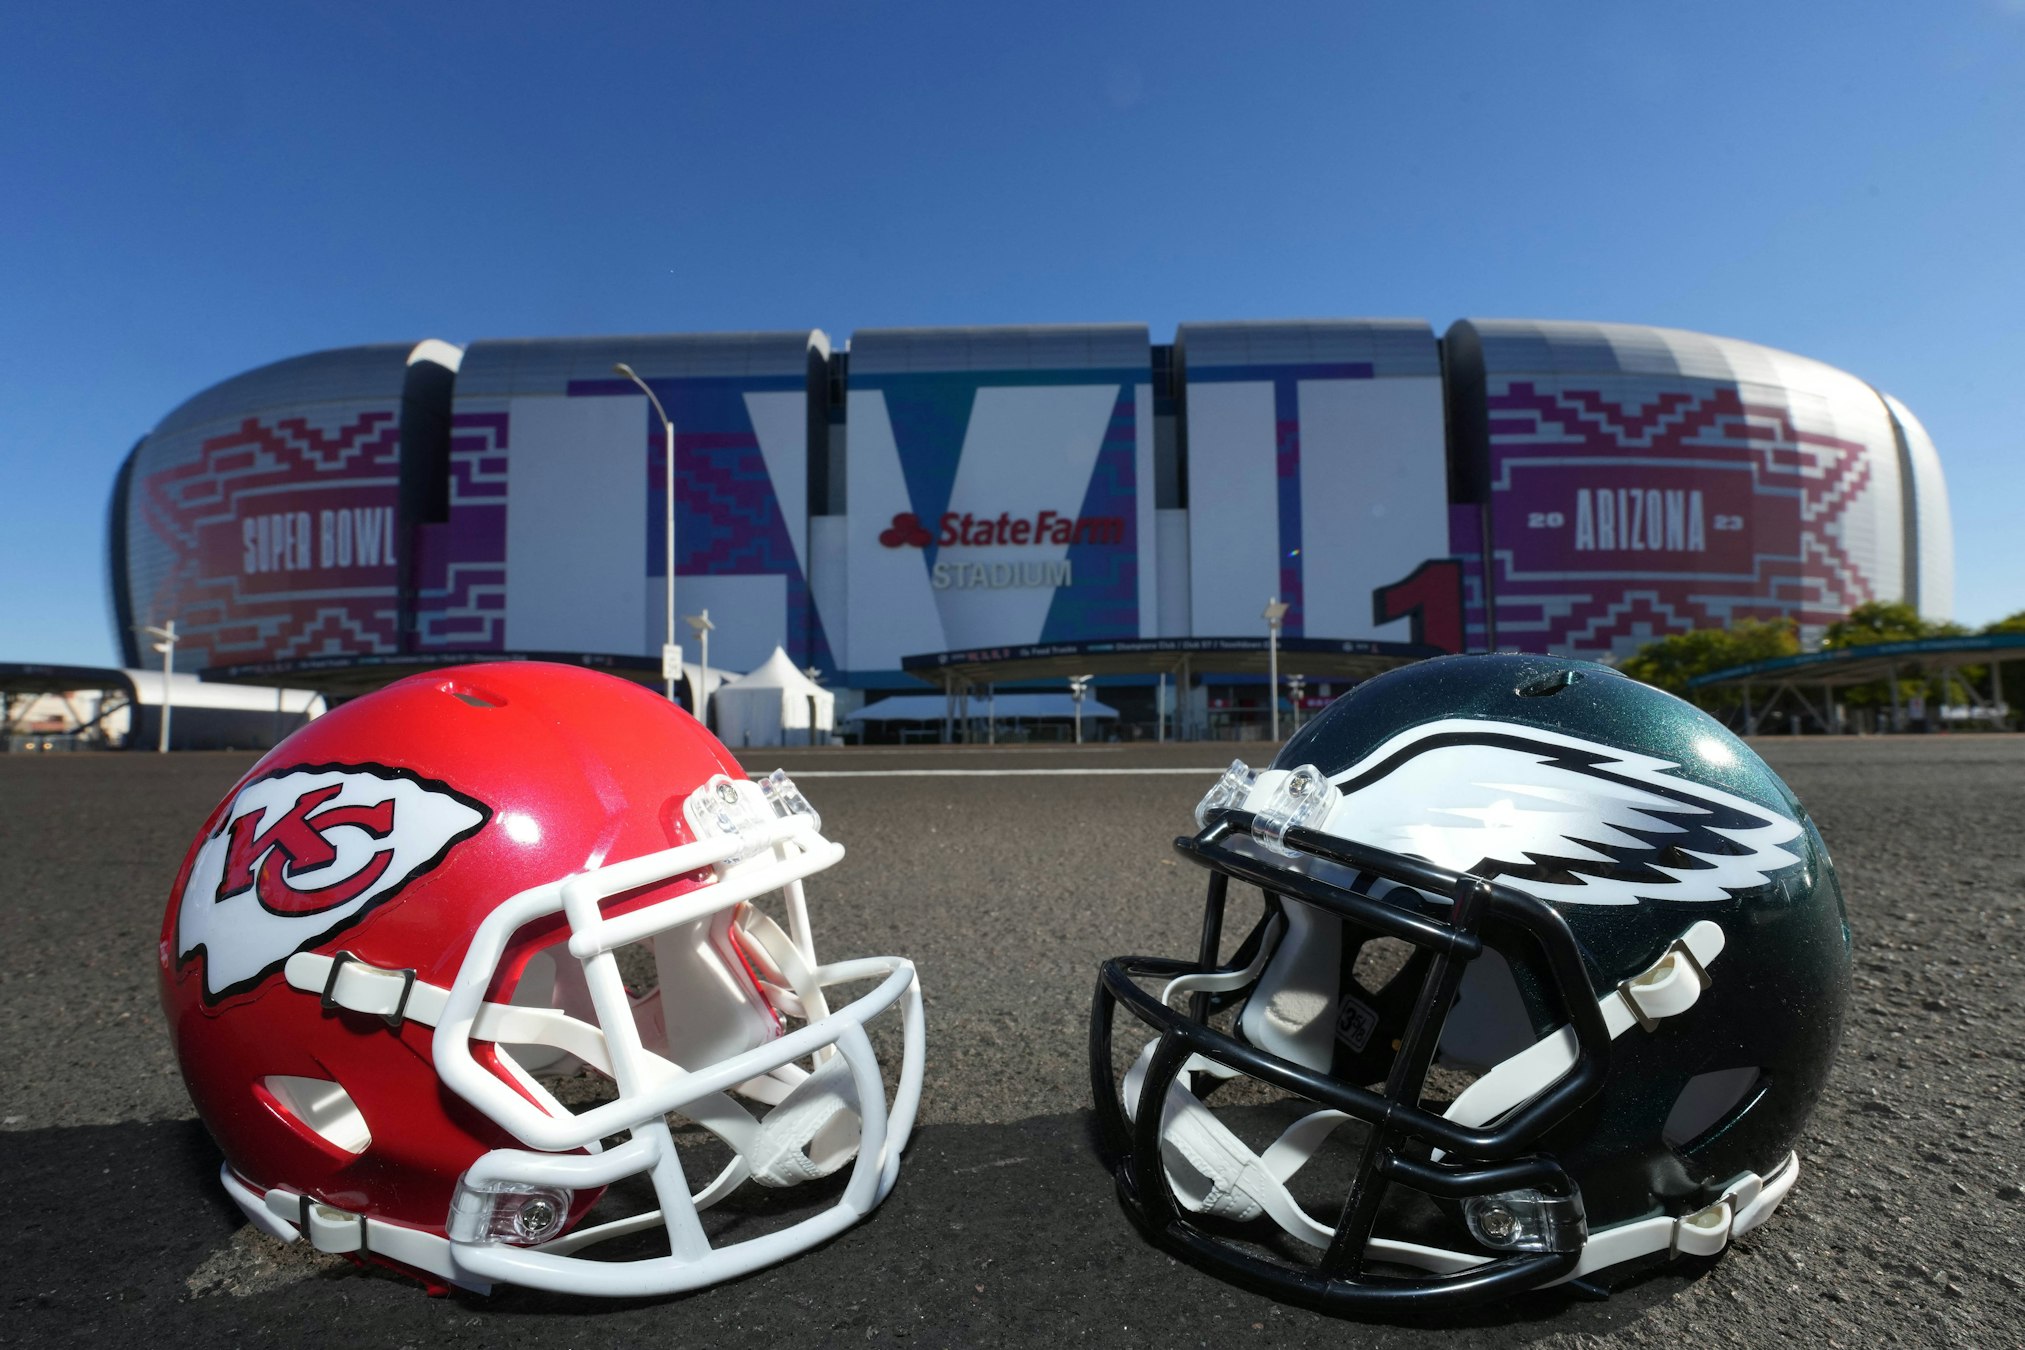 Fox Corporation and Fox Sports Announce Super Bowl LVII Community